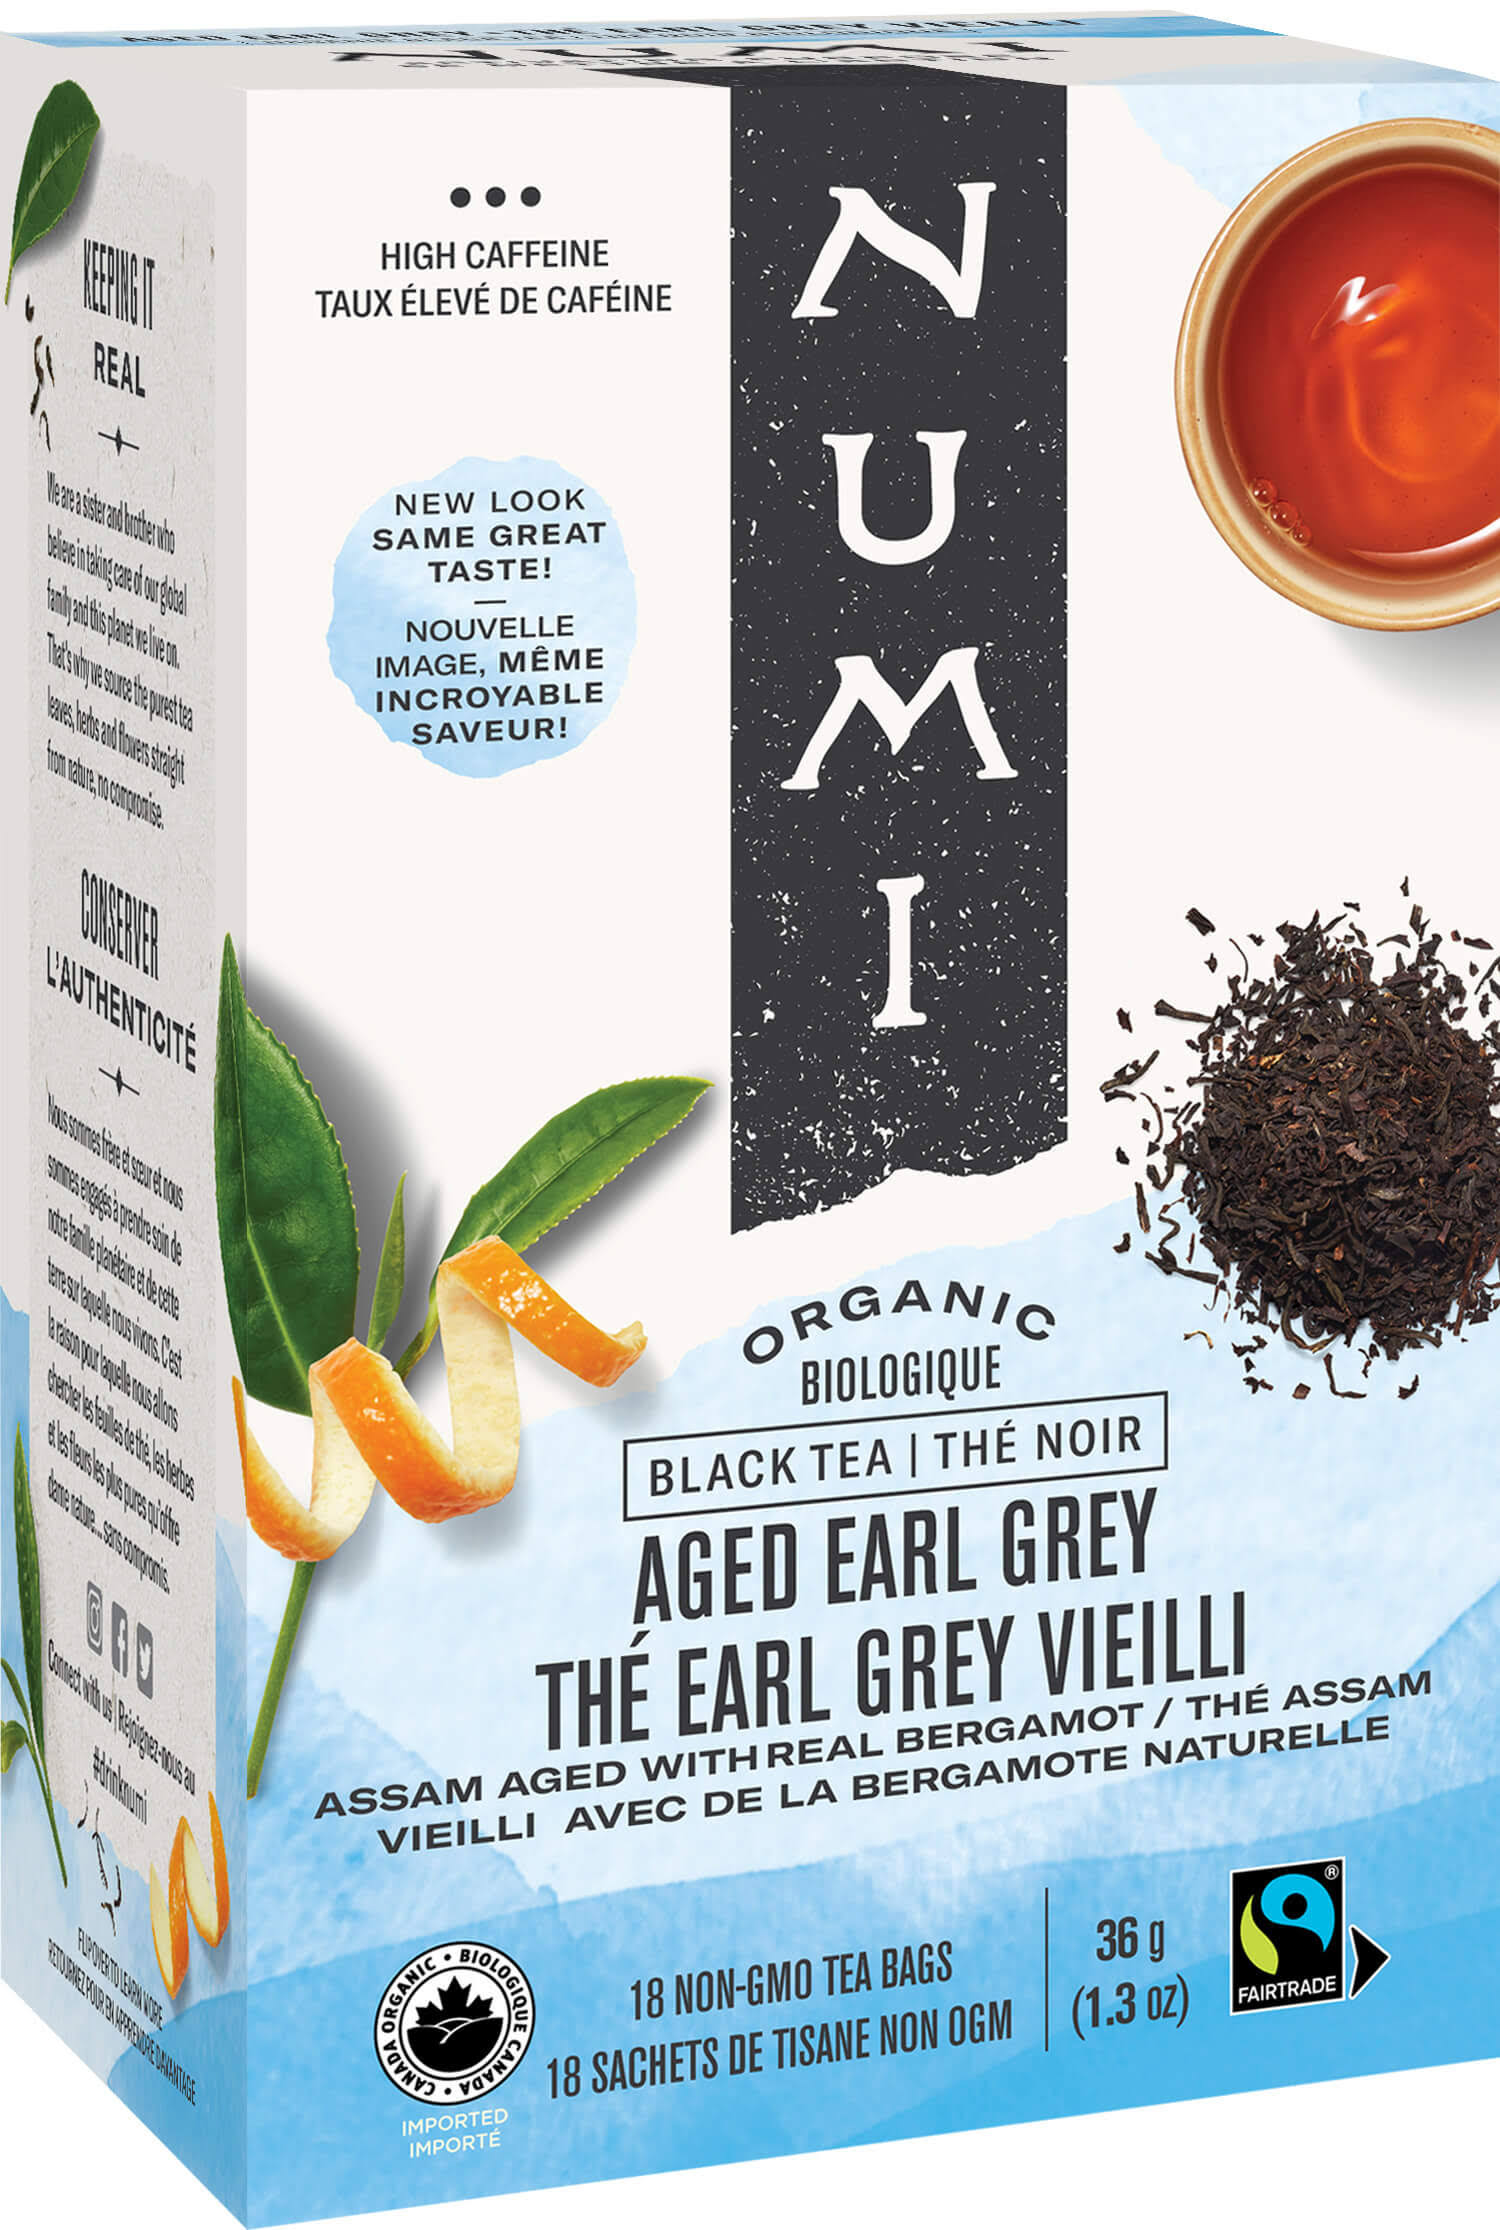 Numi Aged Earl Grey Bergamot Black Tea - 18pk